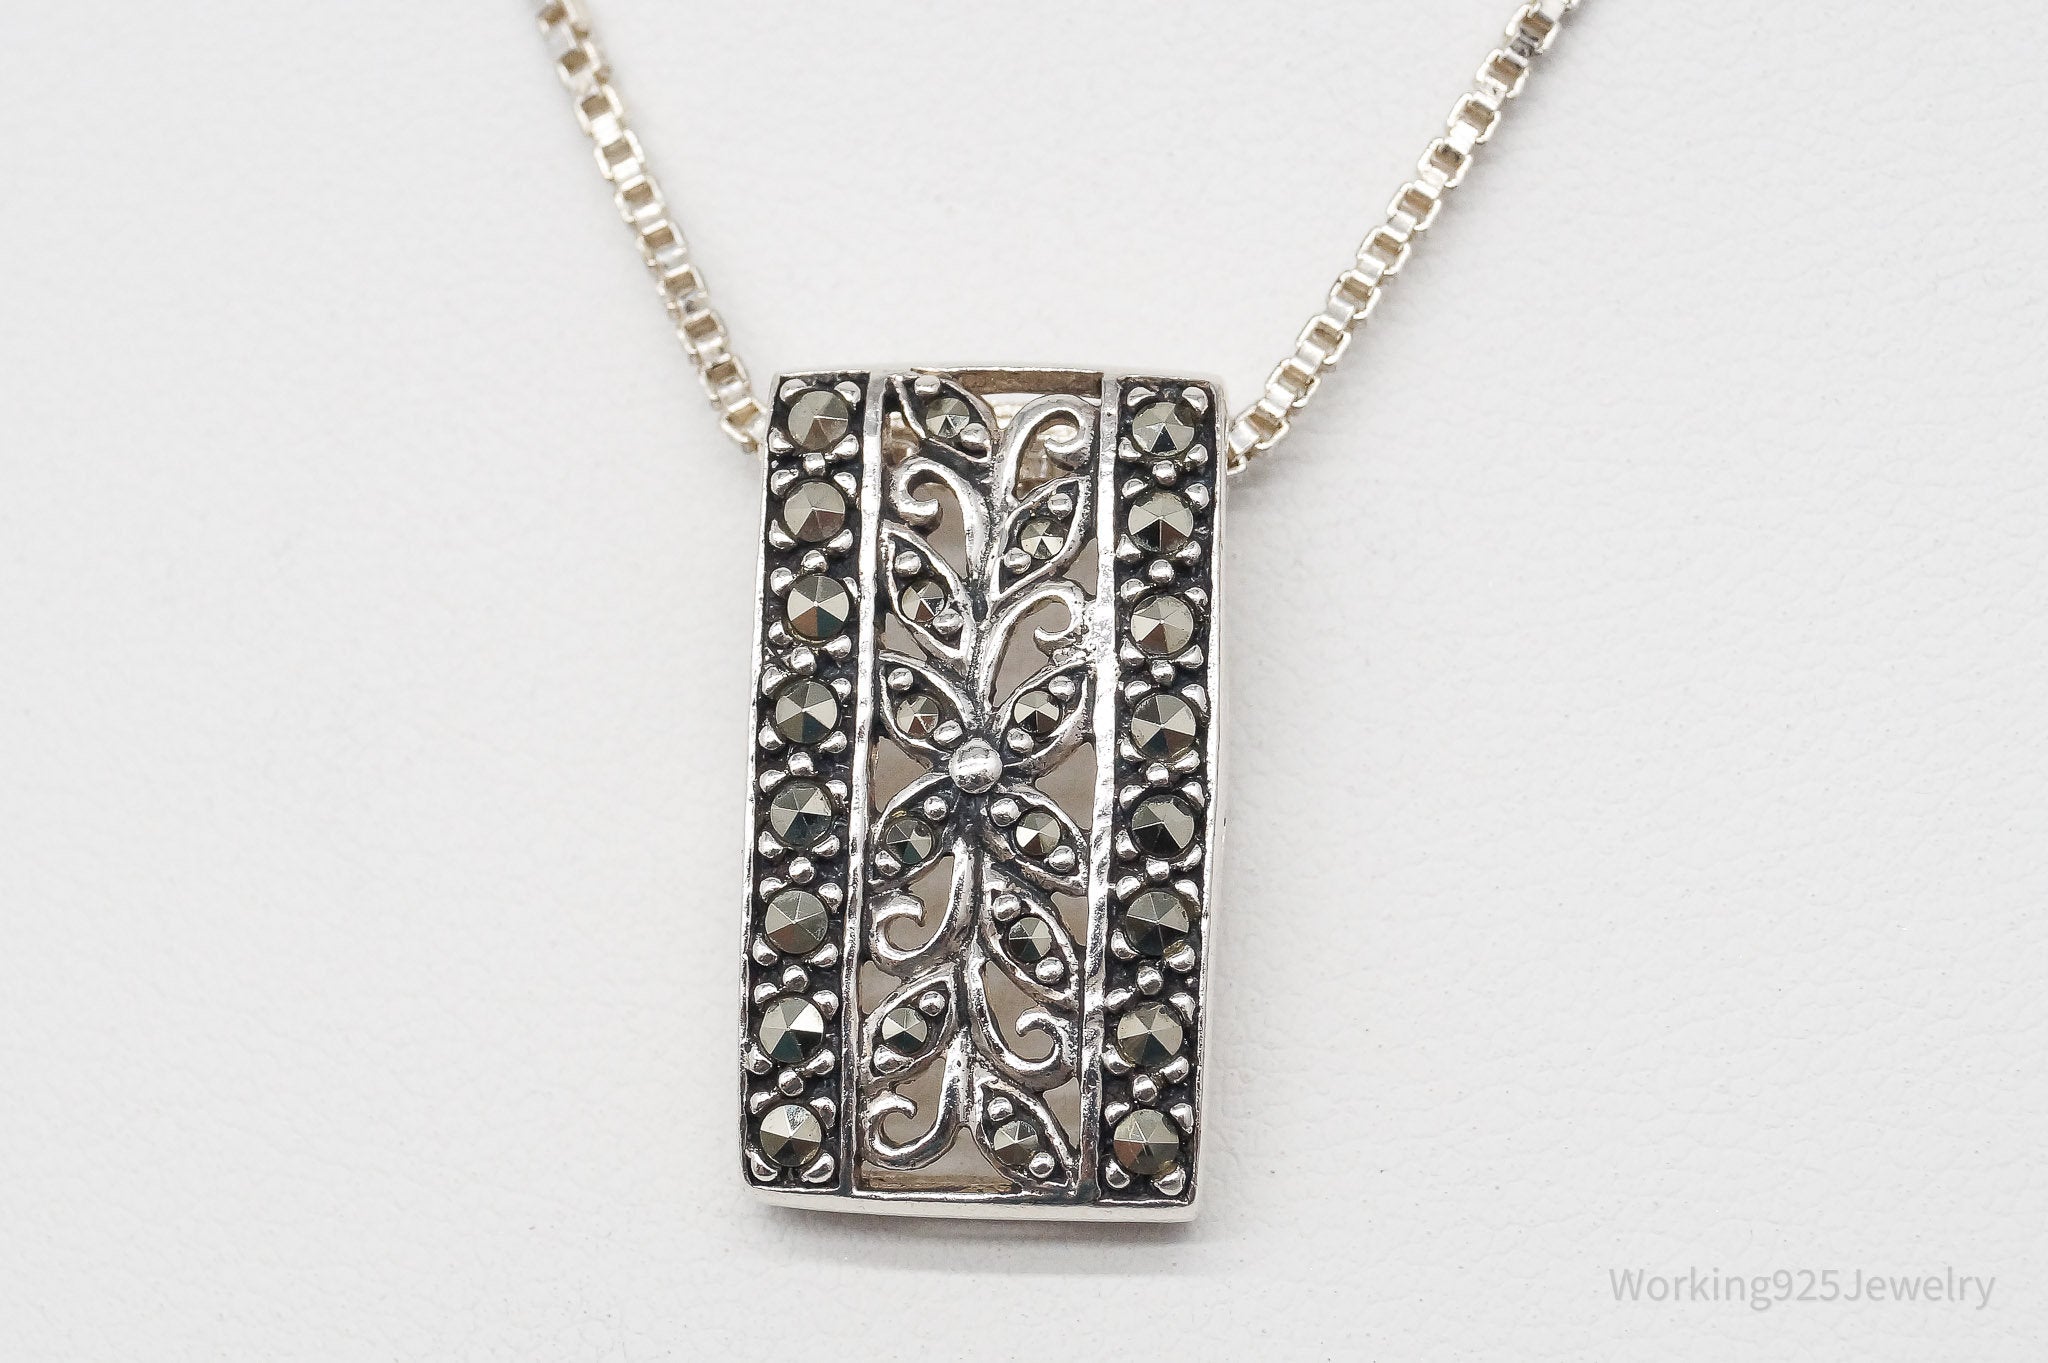 Vintage Marcasite Sterling Silver Necklace 24"